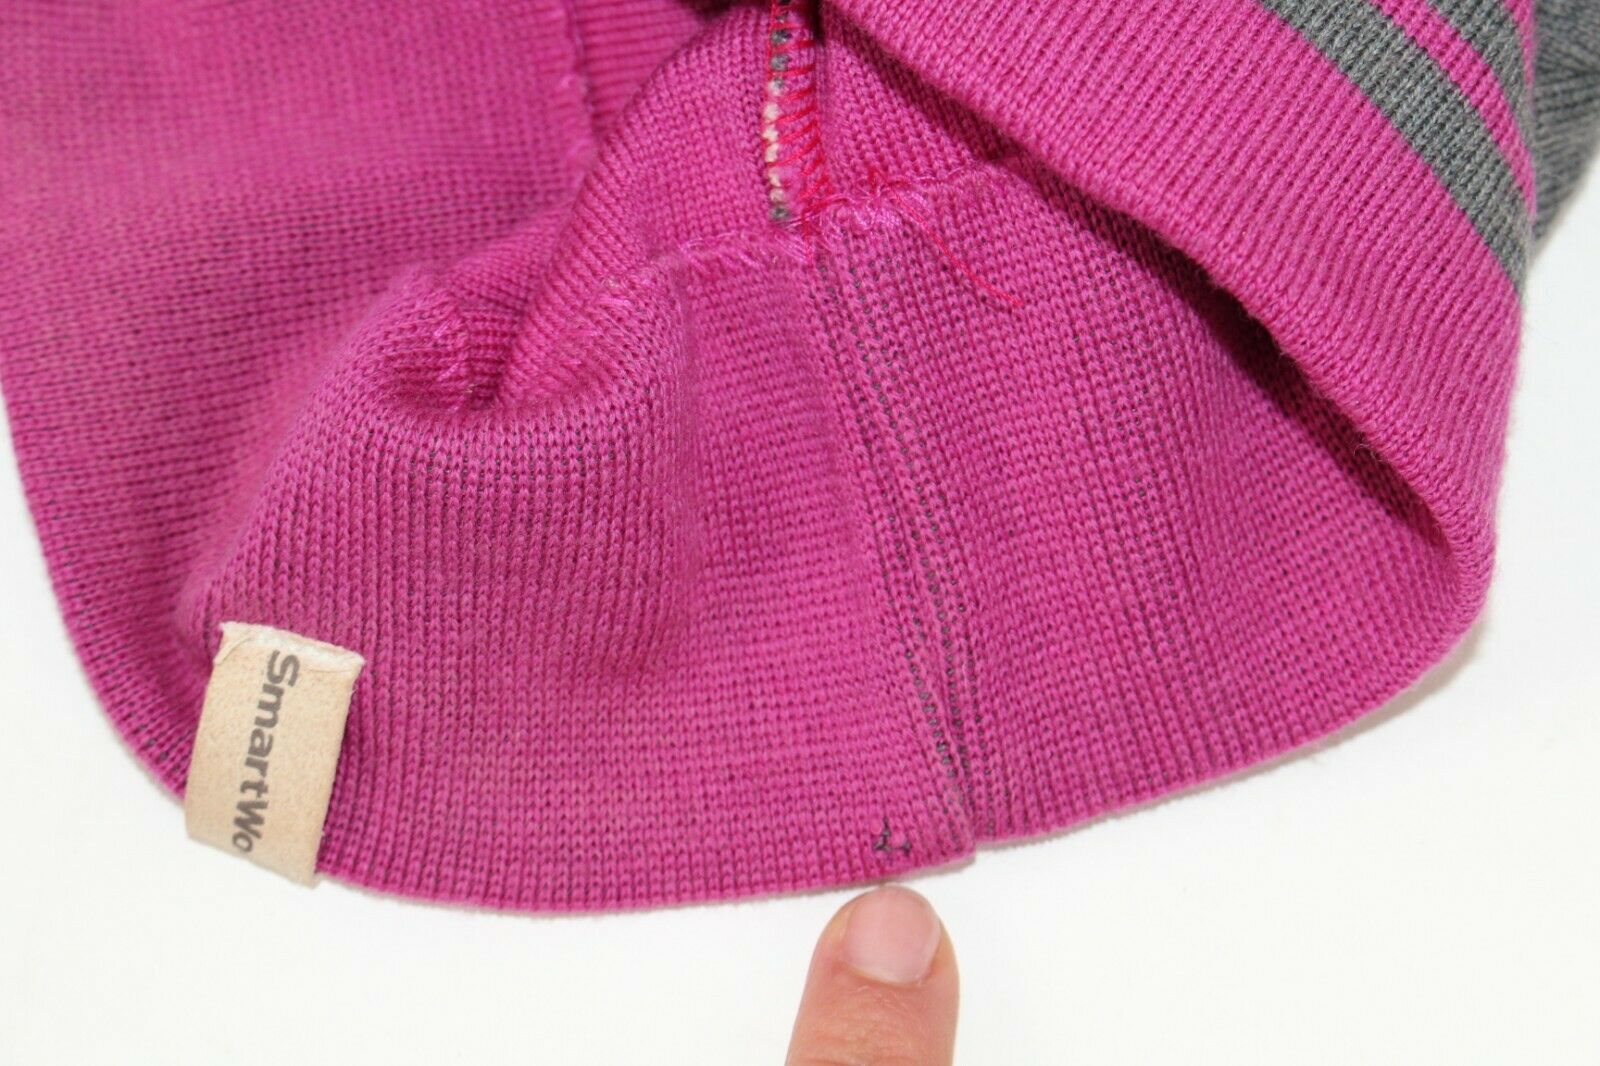 Girls Youth SMARTWOOL Beanie Pink Fuschia Striped Tassle Pom Pom Merino Wool